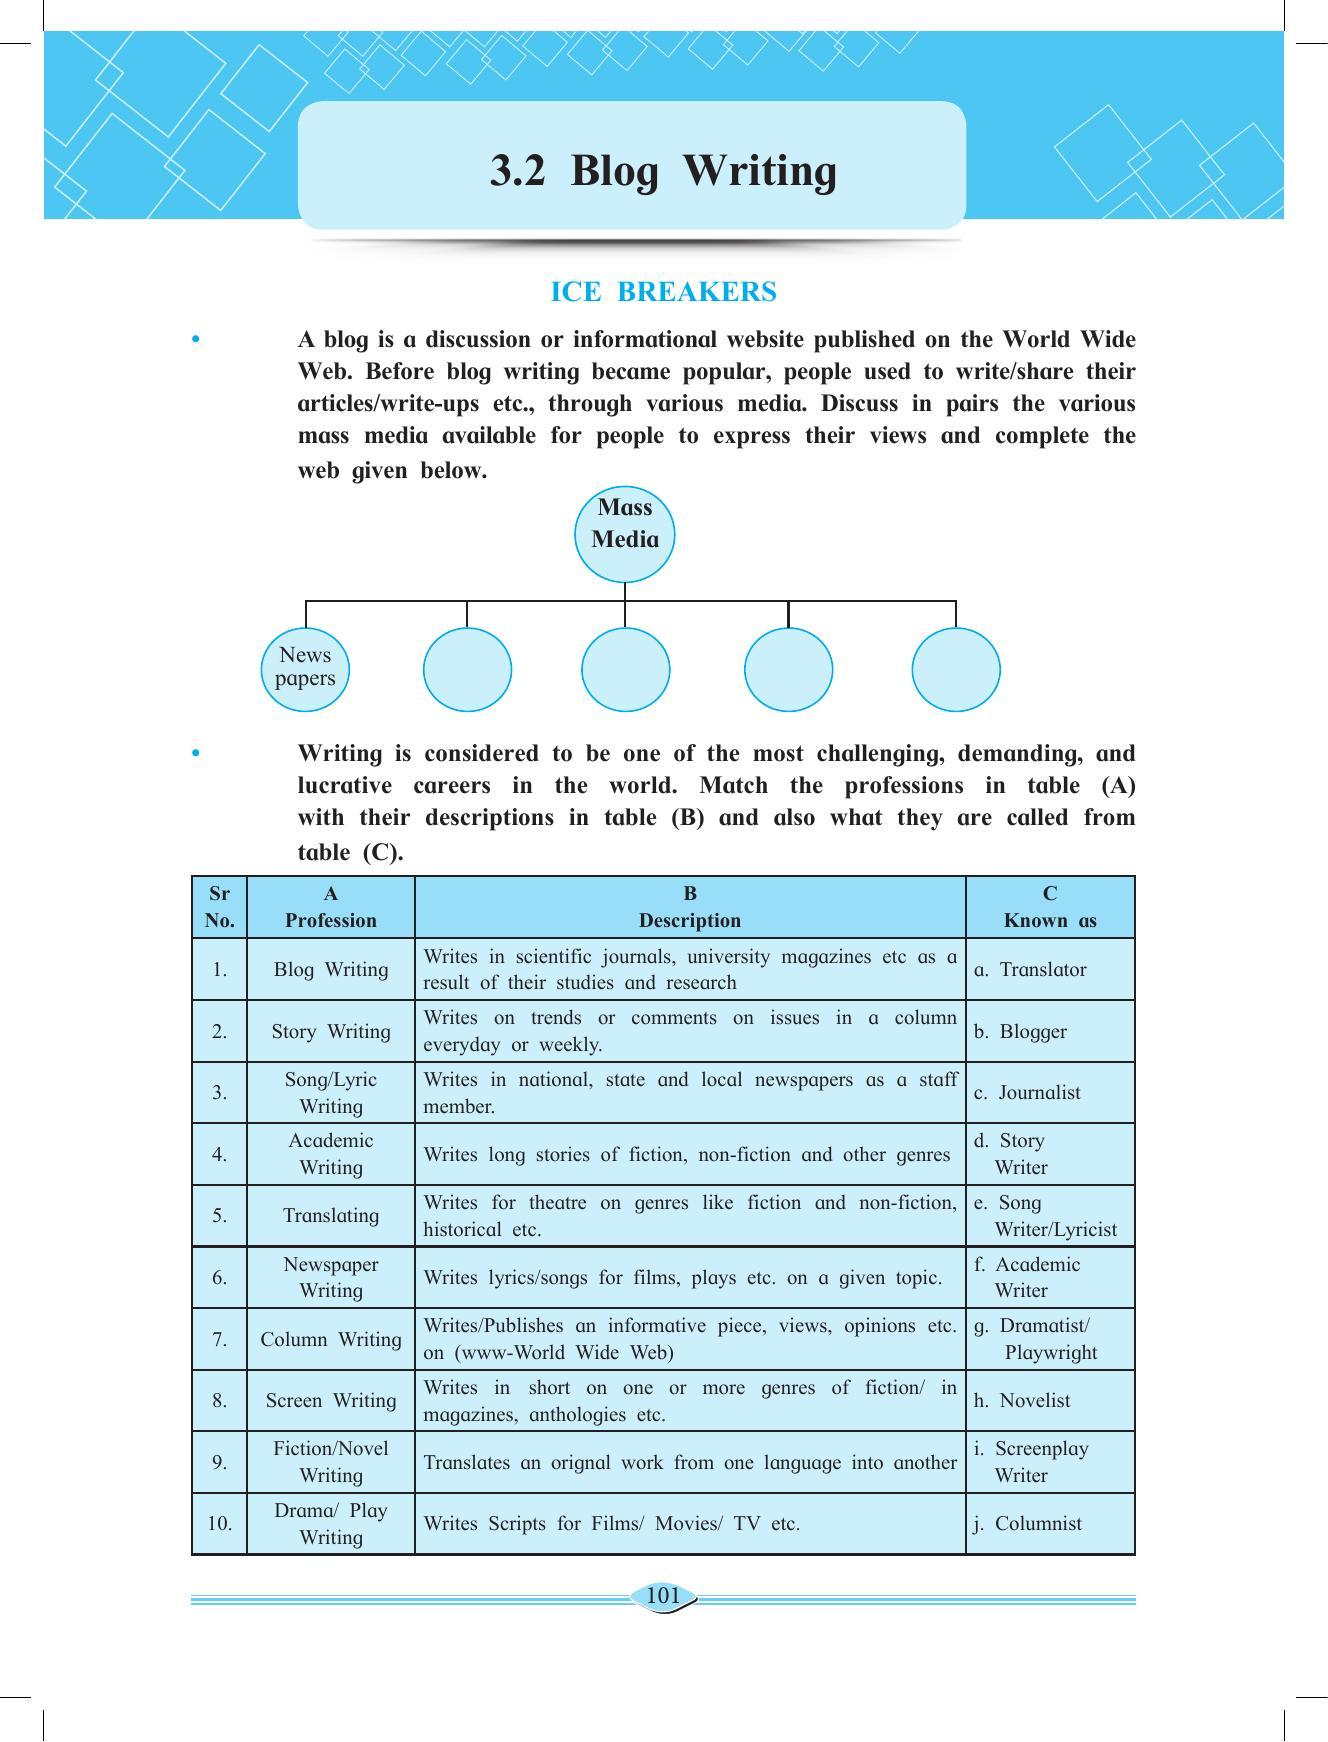 Maharashtra Board Class 11 English Textbook - Page 115